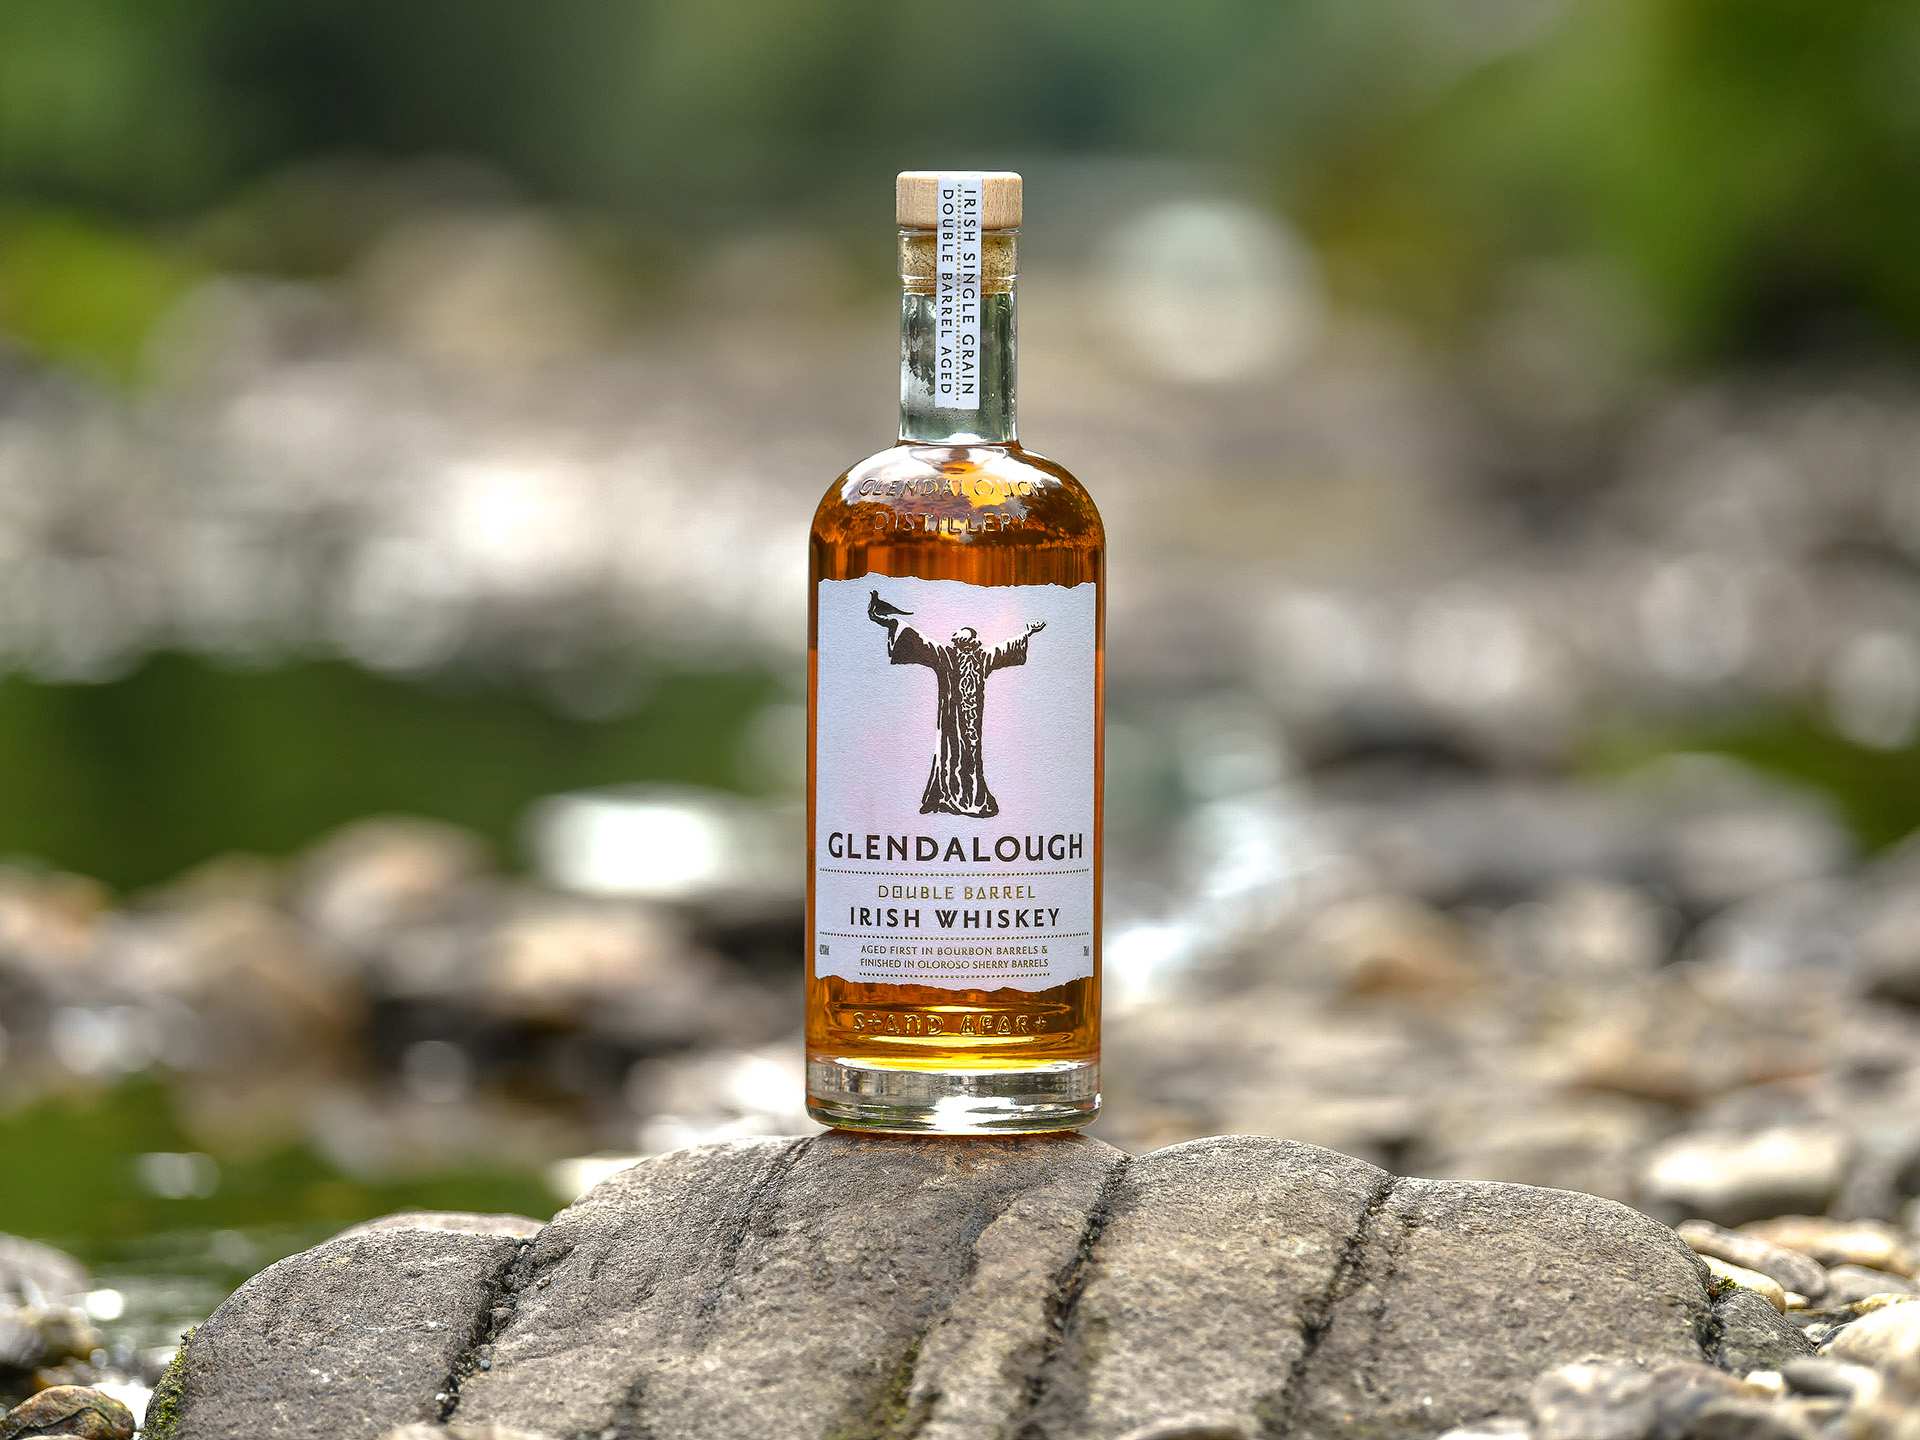 A bottle of Glendalough Double Barrel Irish Whiskey in a nature setting